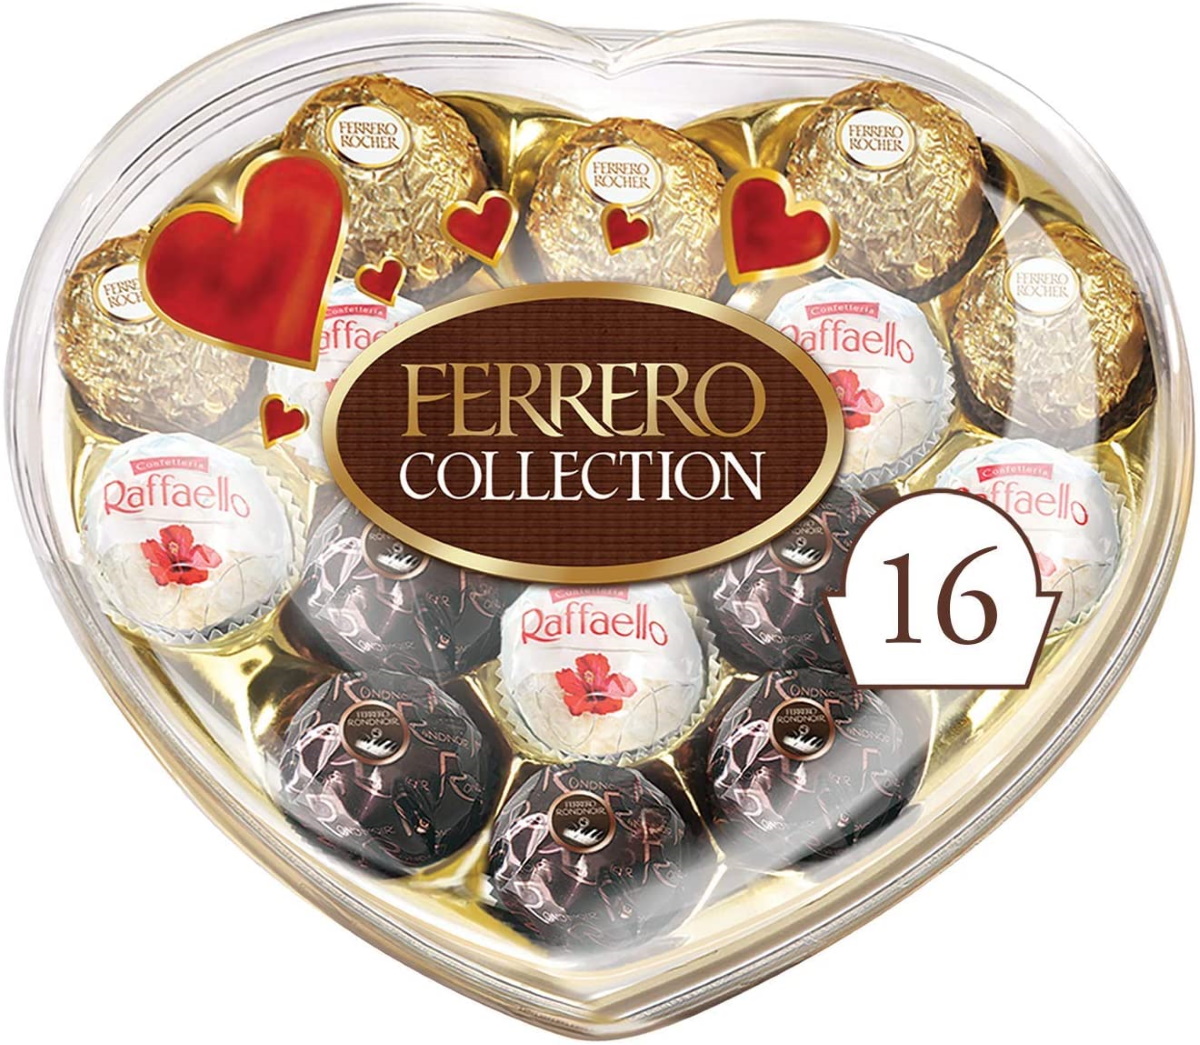 Ferrero Rocher Collection Gift Box